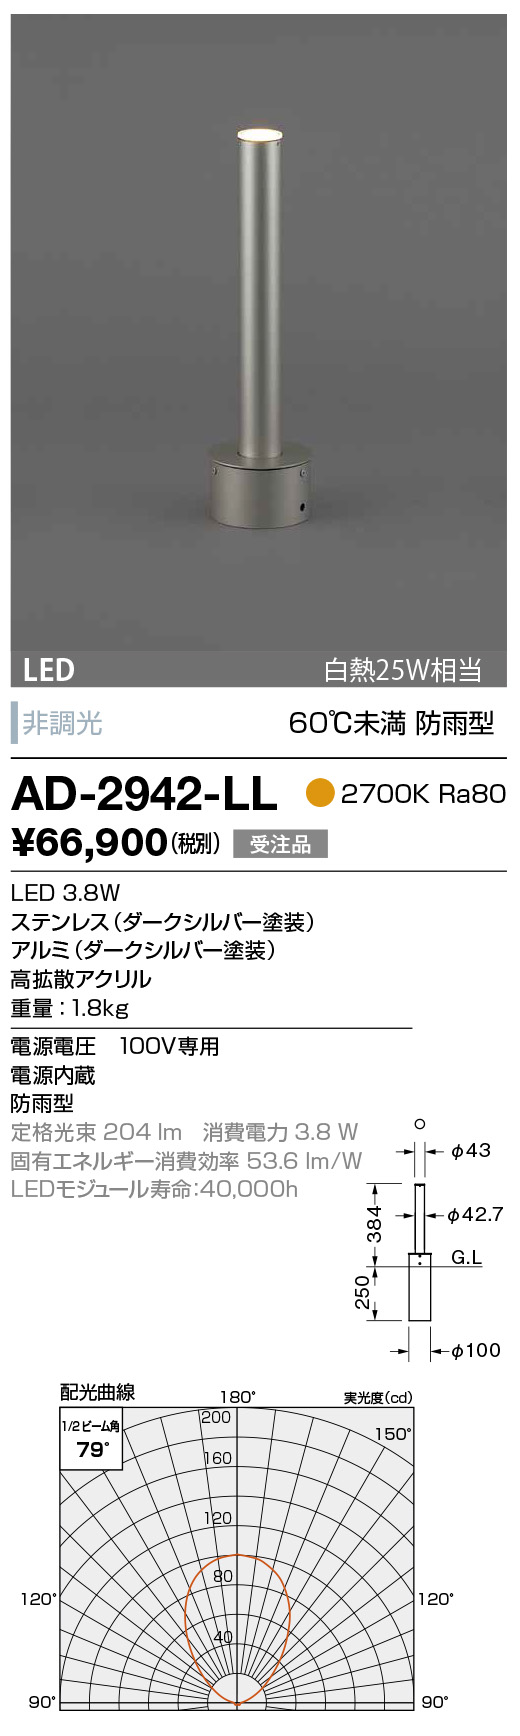 AD-2942-LL エクステリア LEDスーパースリムガーデンライト ダークシルバー塗装 白熱25W相当 アッパー配光タイプ 60℃未満 防雨型 非調光 電球色 山田照明 - 2